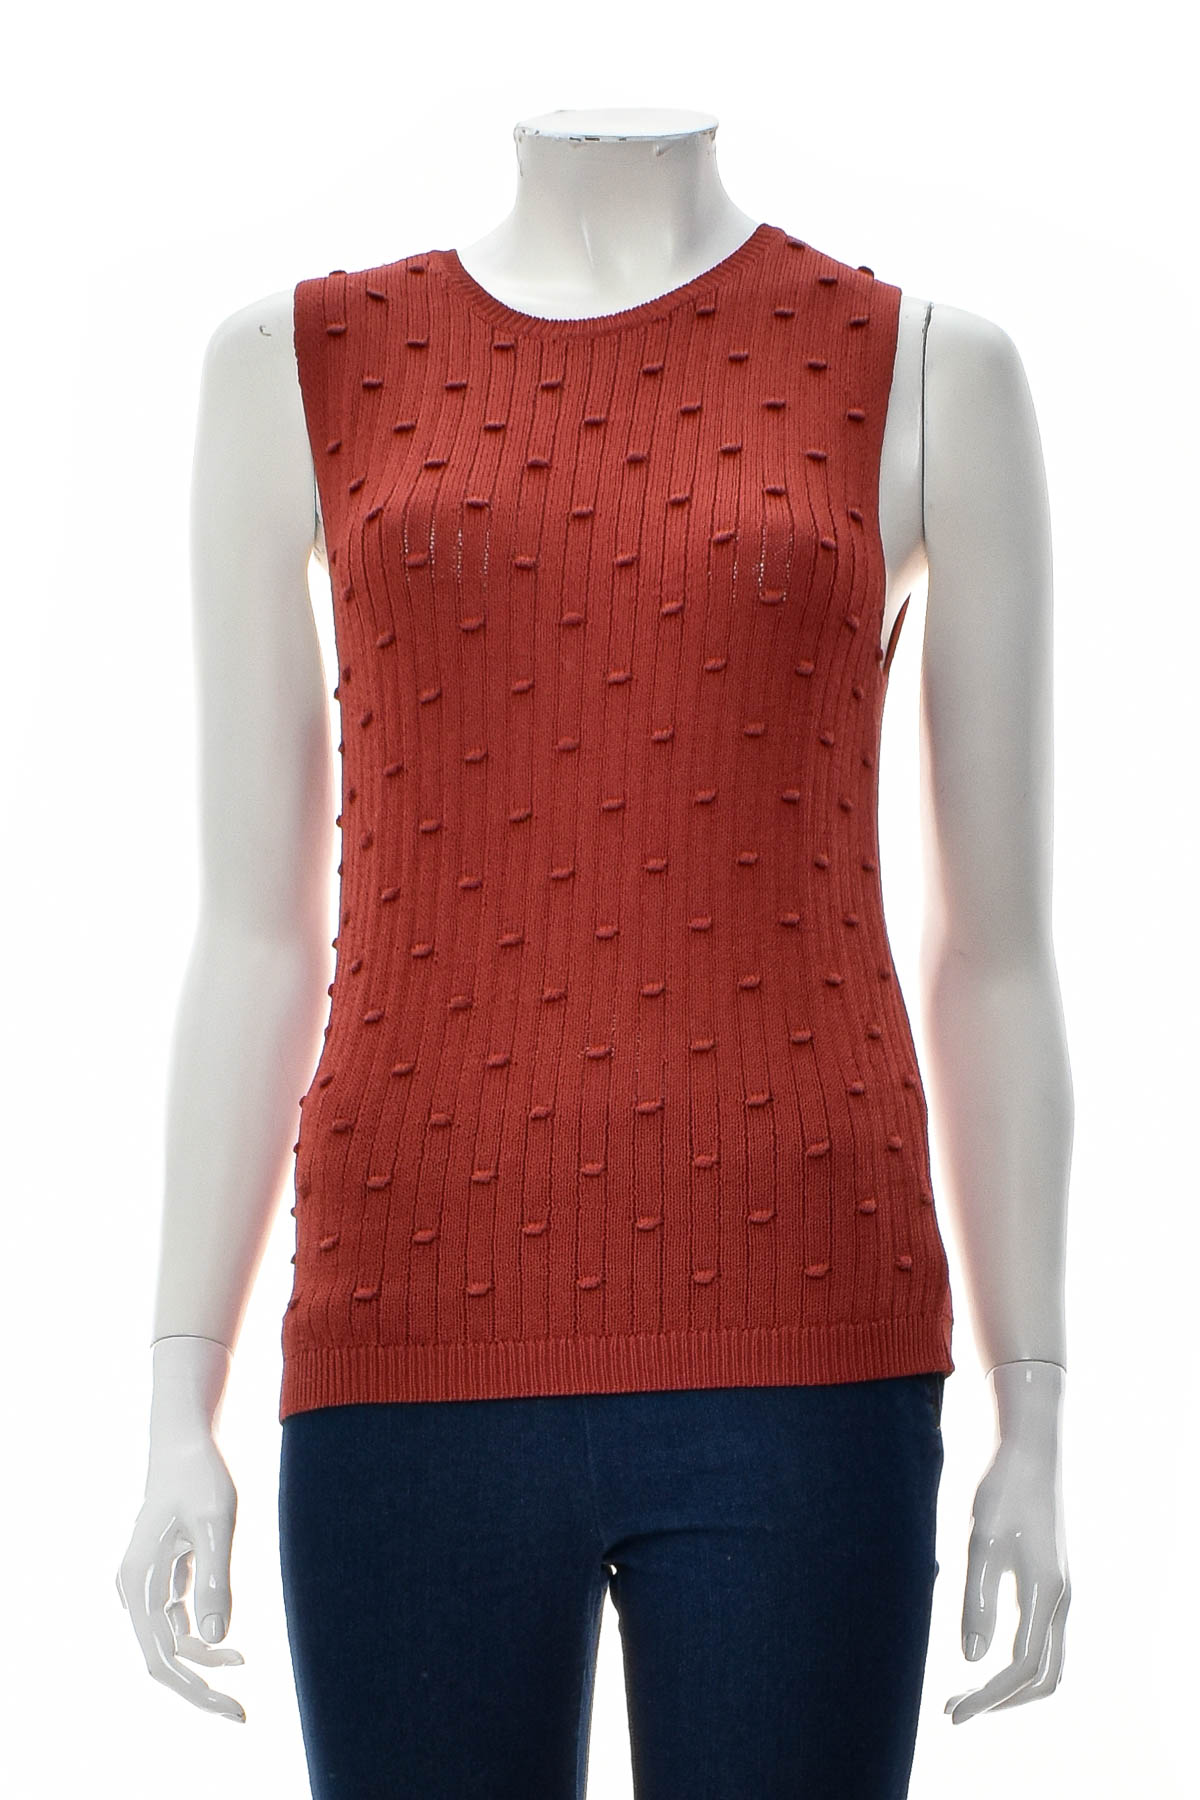 Women's sweater - ANN TAYLOR - 0